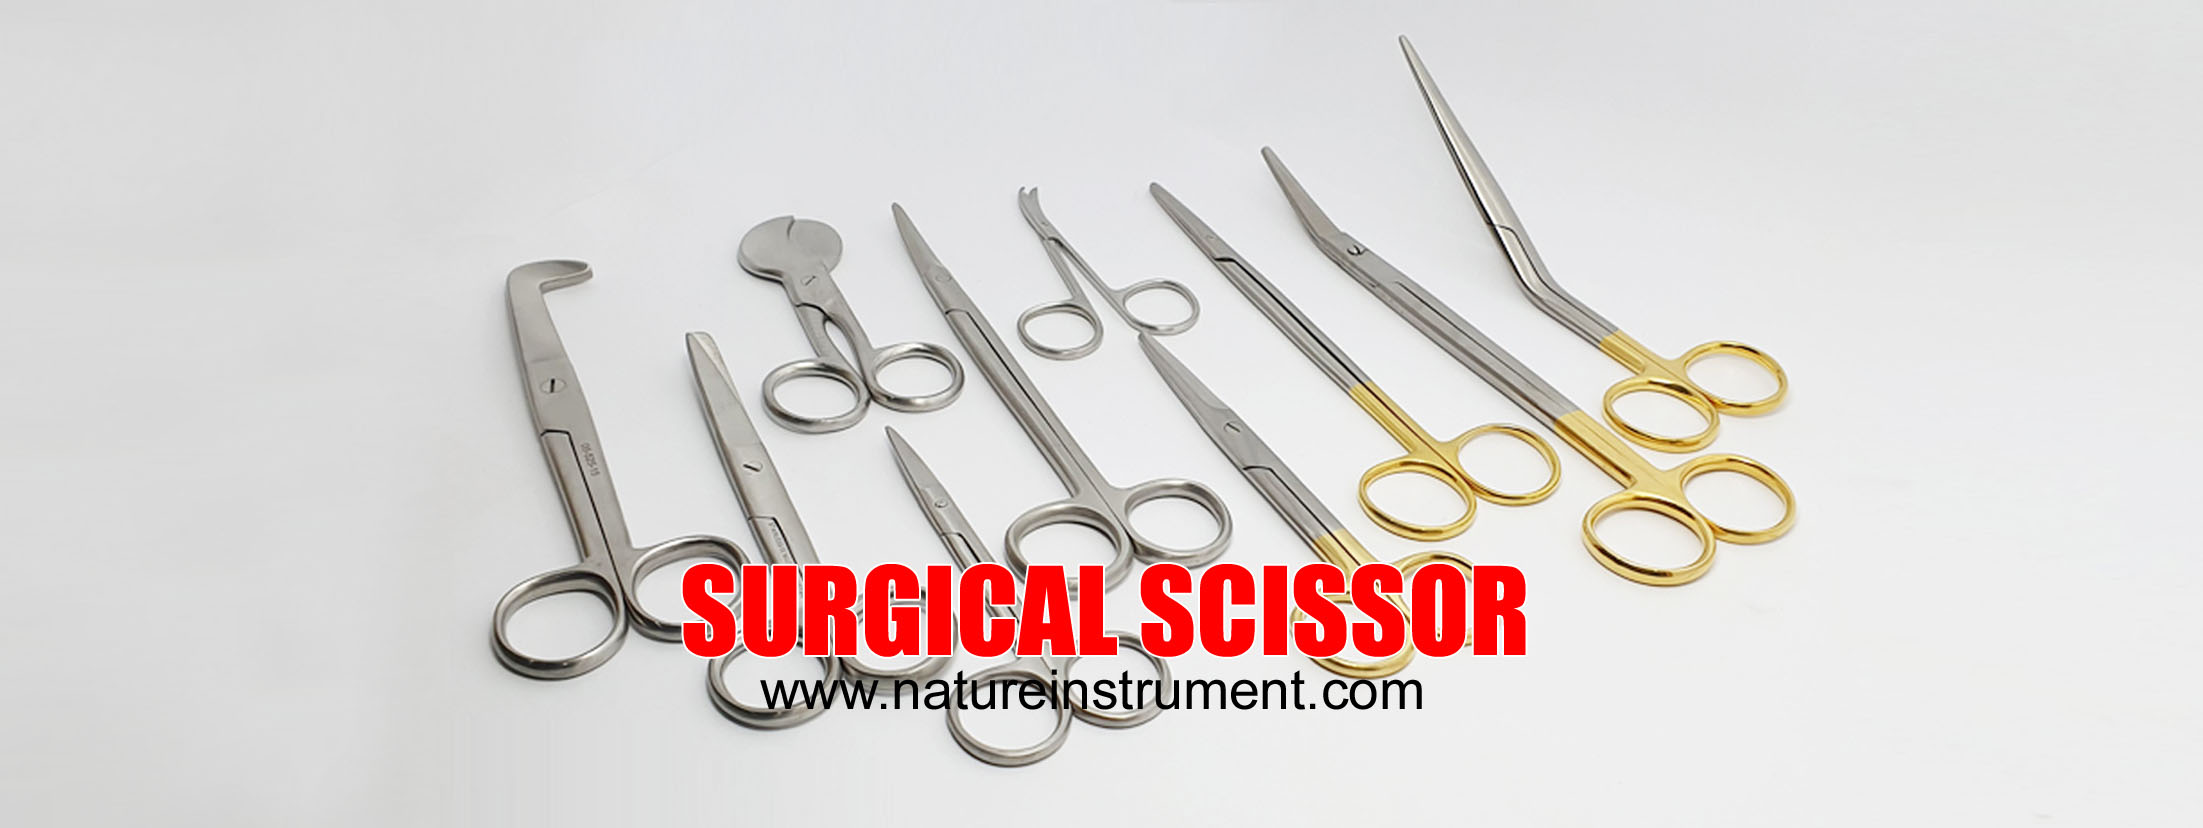 https://natureinstrument.com/source/banner/main/nature-instrument-surgical-scissor.jpg